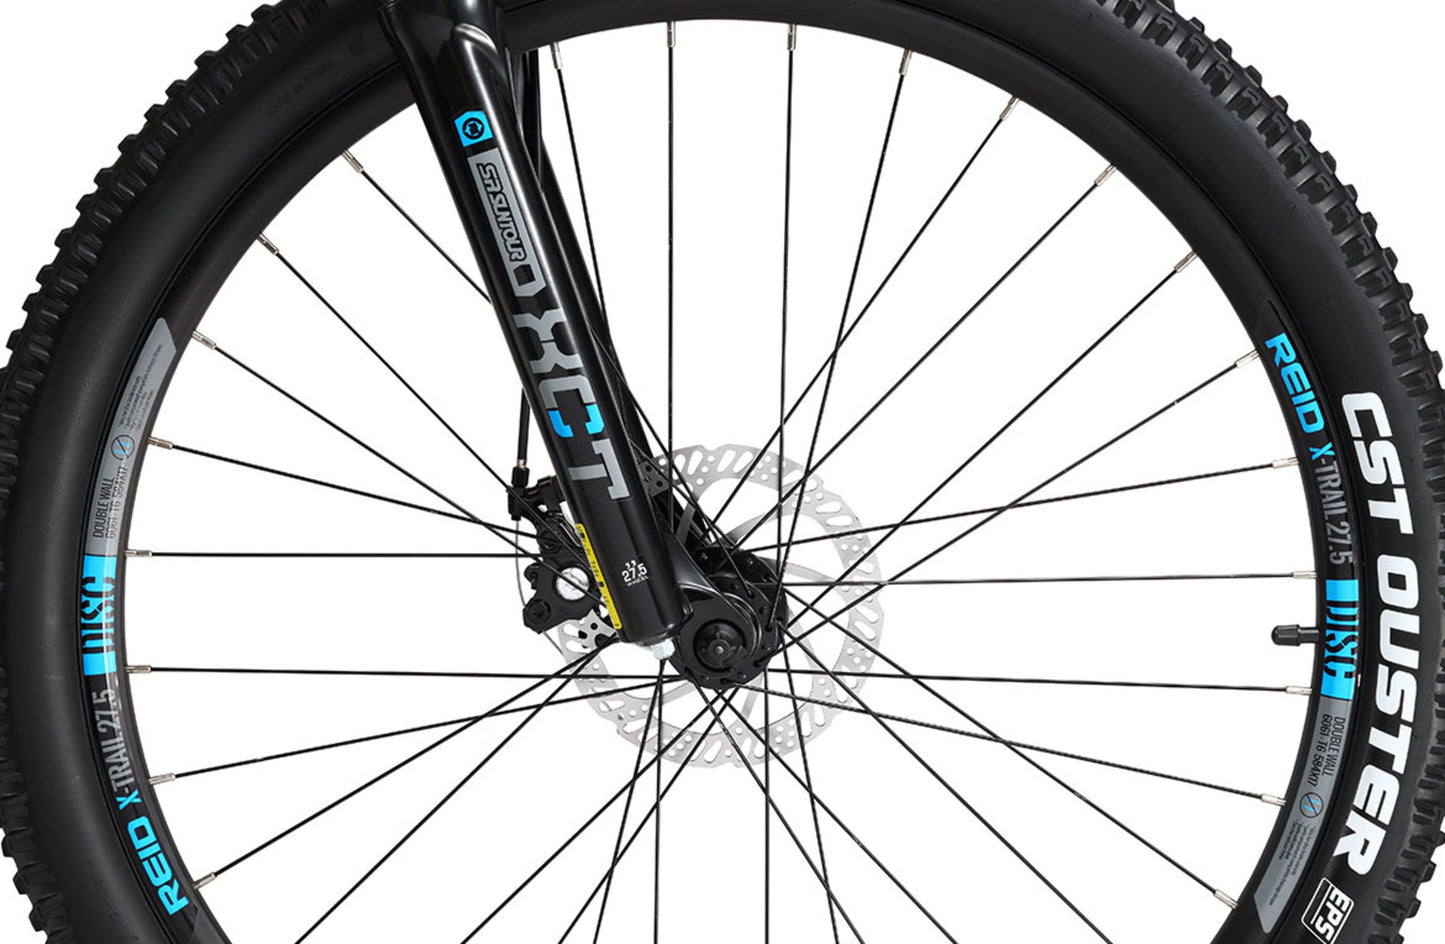 X-trail Mountain Bike in Gloss Black showing Suntour suspension fork from Reid Cycles Australia 